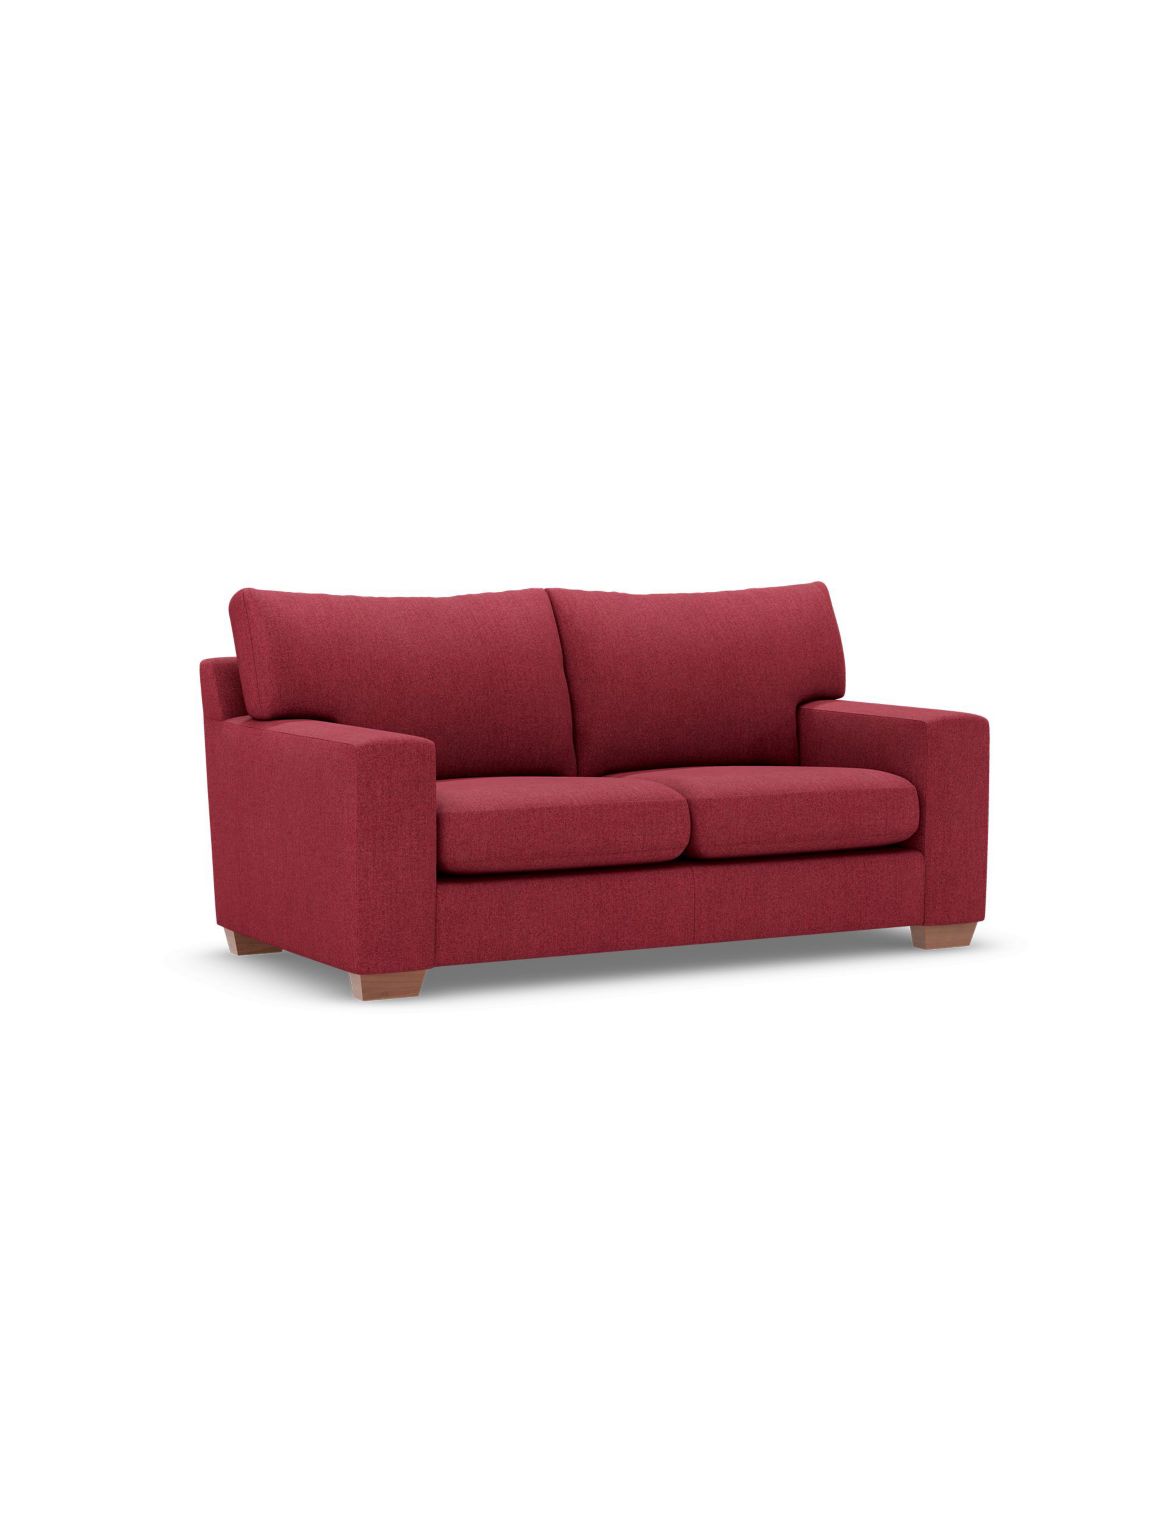 Alfie Small Sofa red